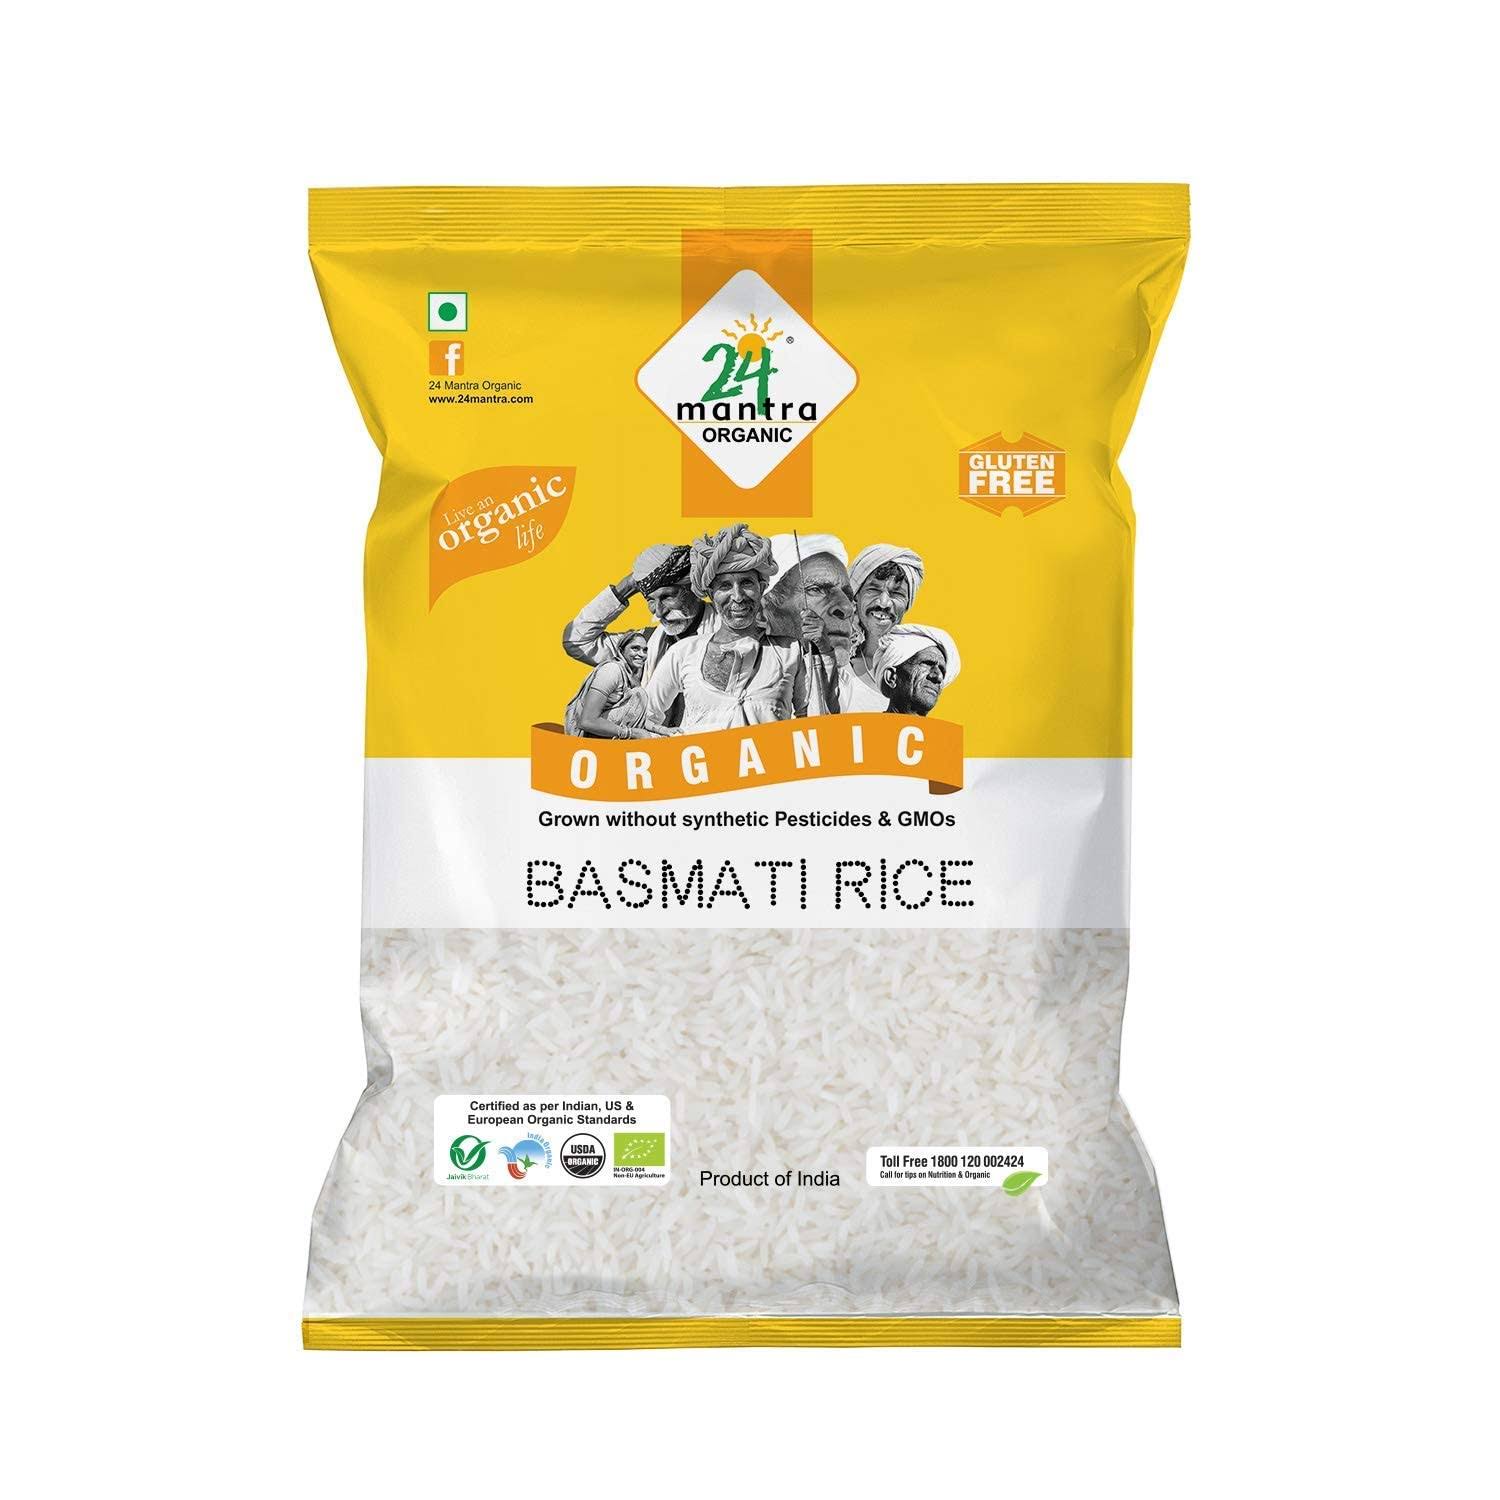 24 Mantra Organic Basmati White Rice 10 lbs